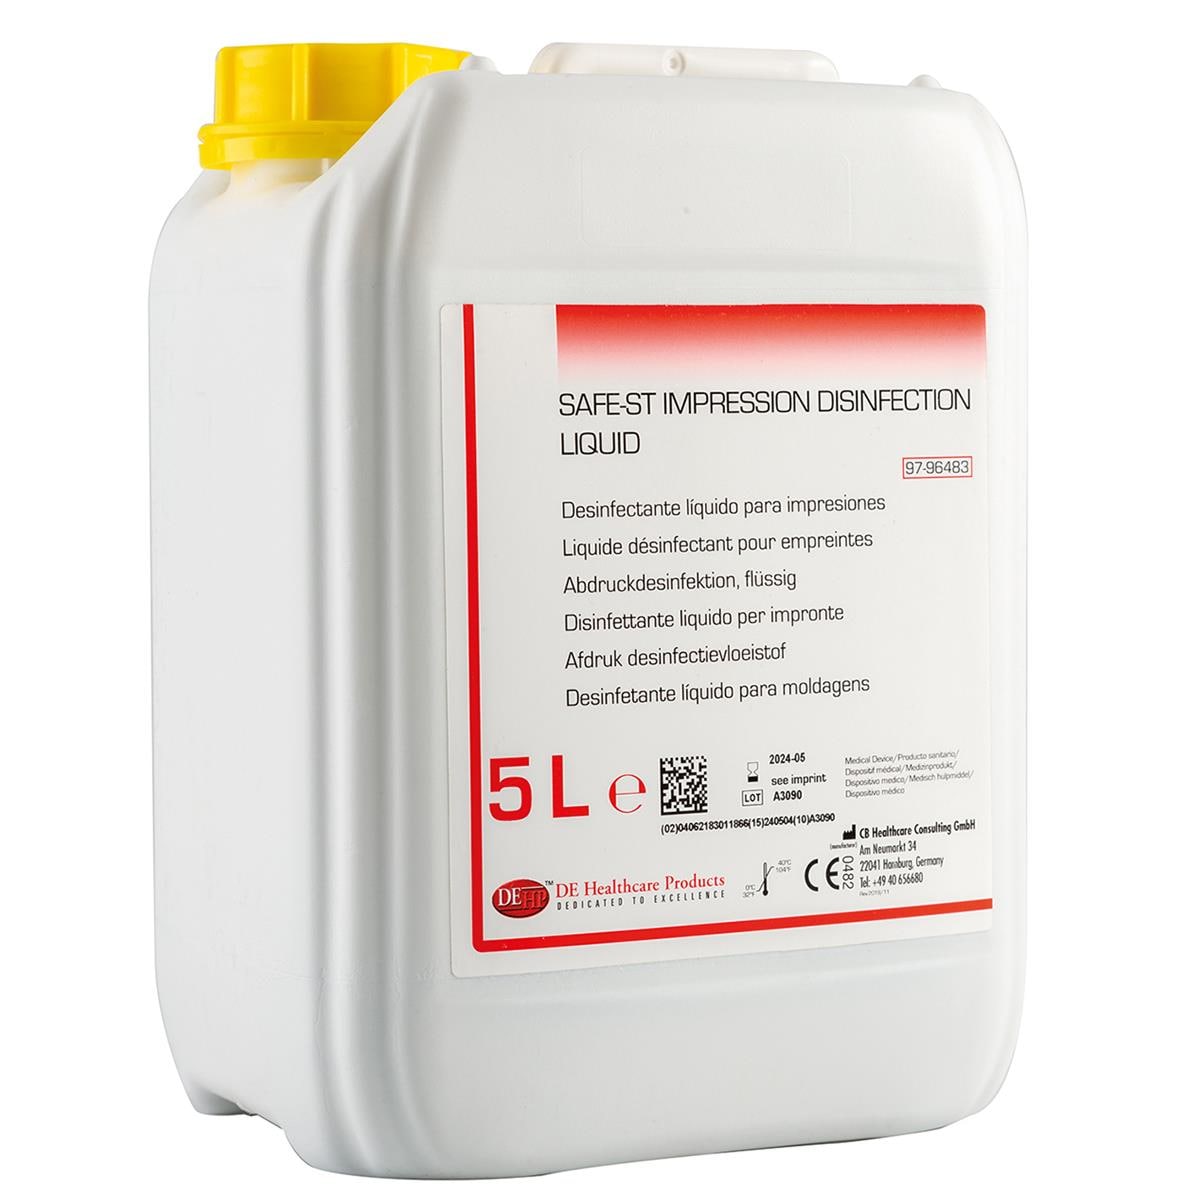 DEHP Safe-ST Impression Disinfection 5L